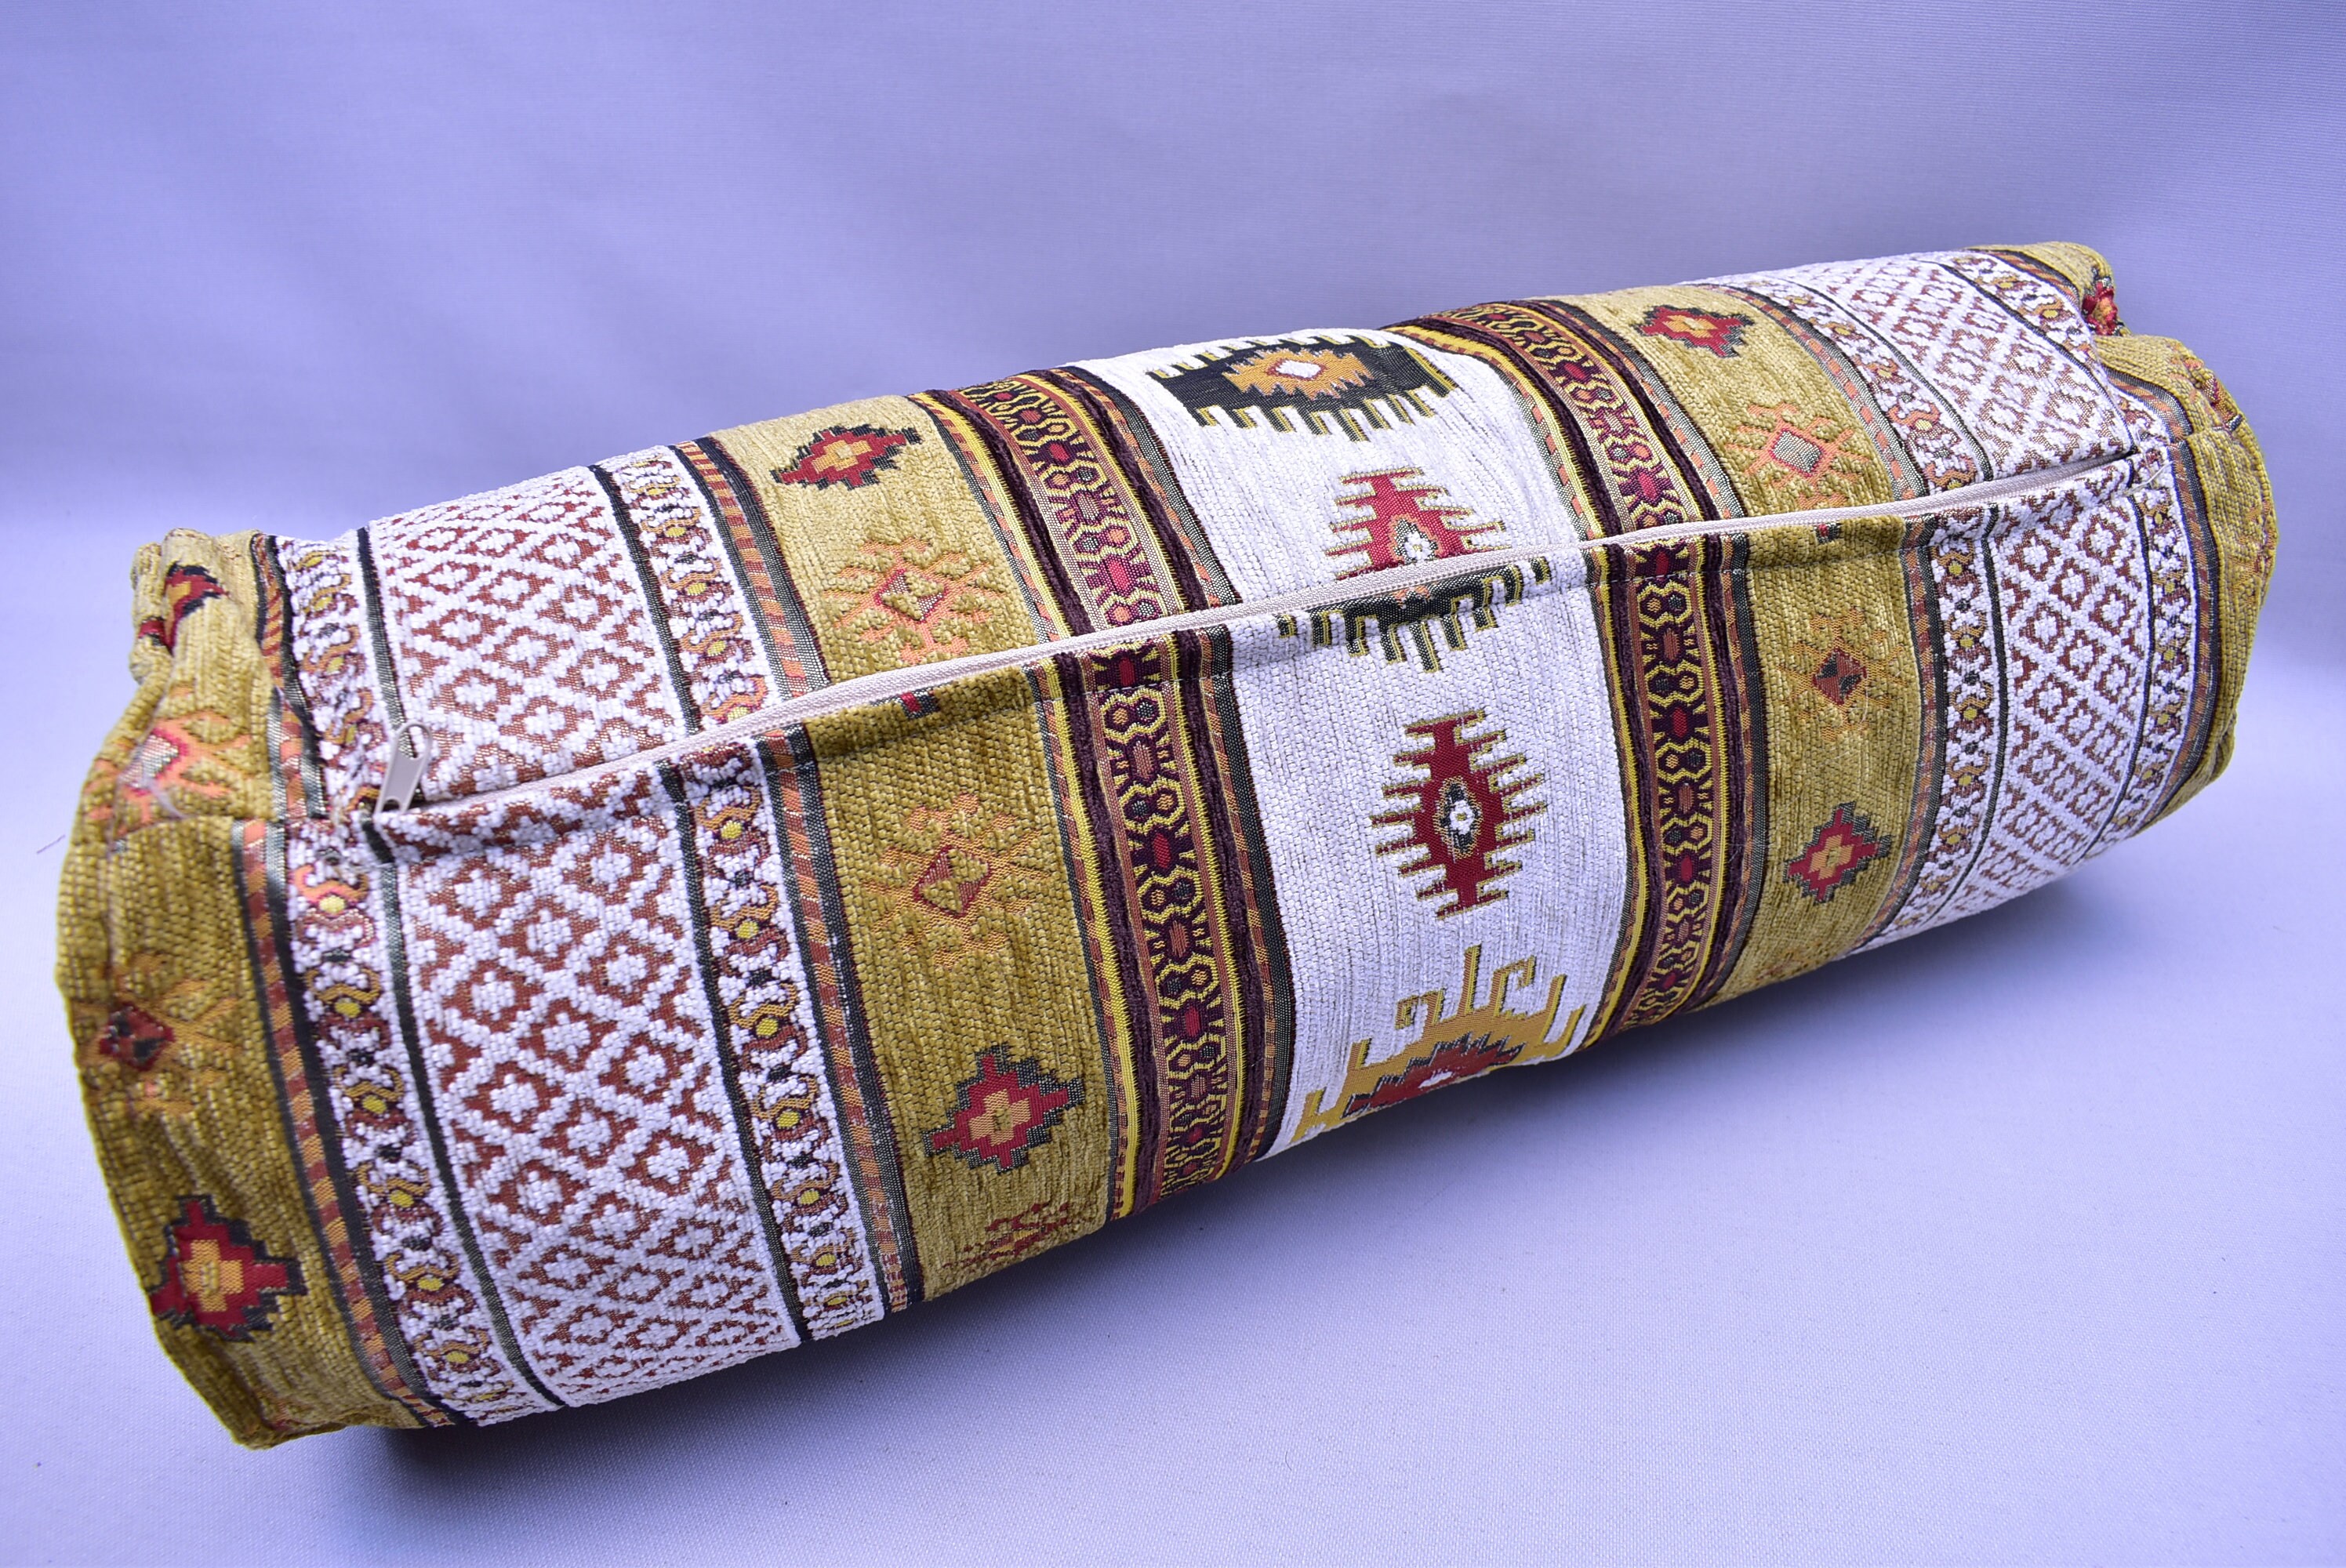 Bolster Cover Ethnic Traditional Art Yoga Under Knee Pillow Cover